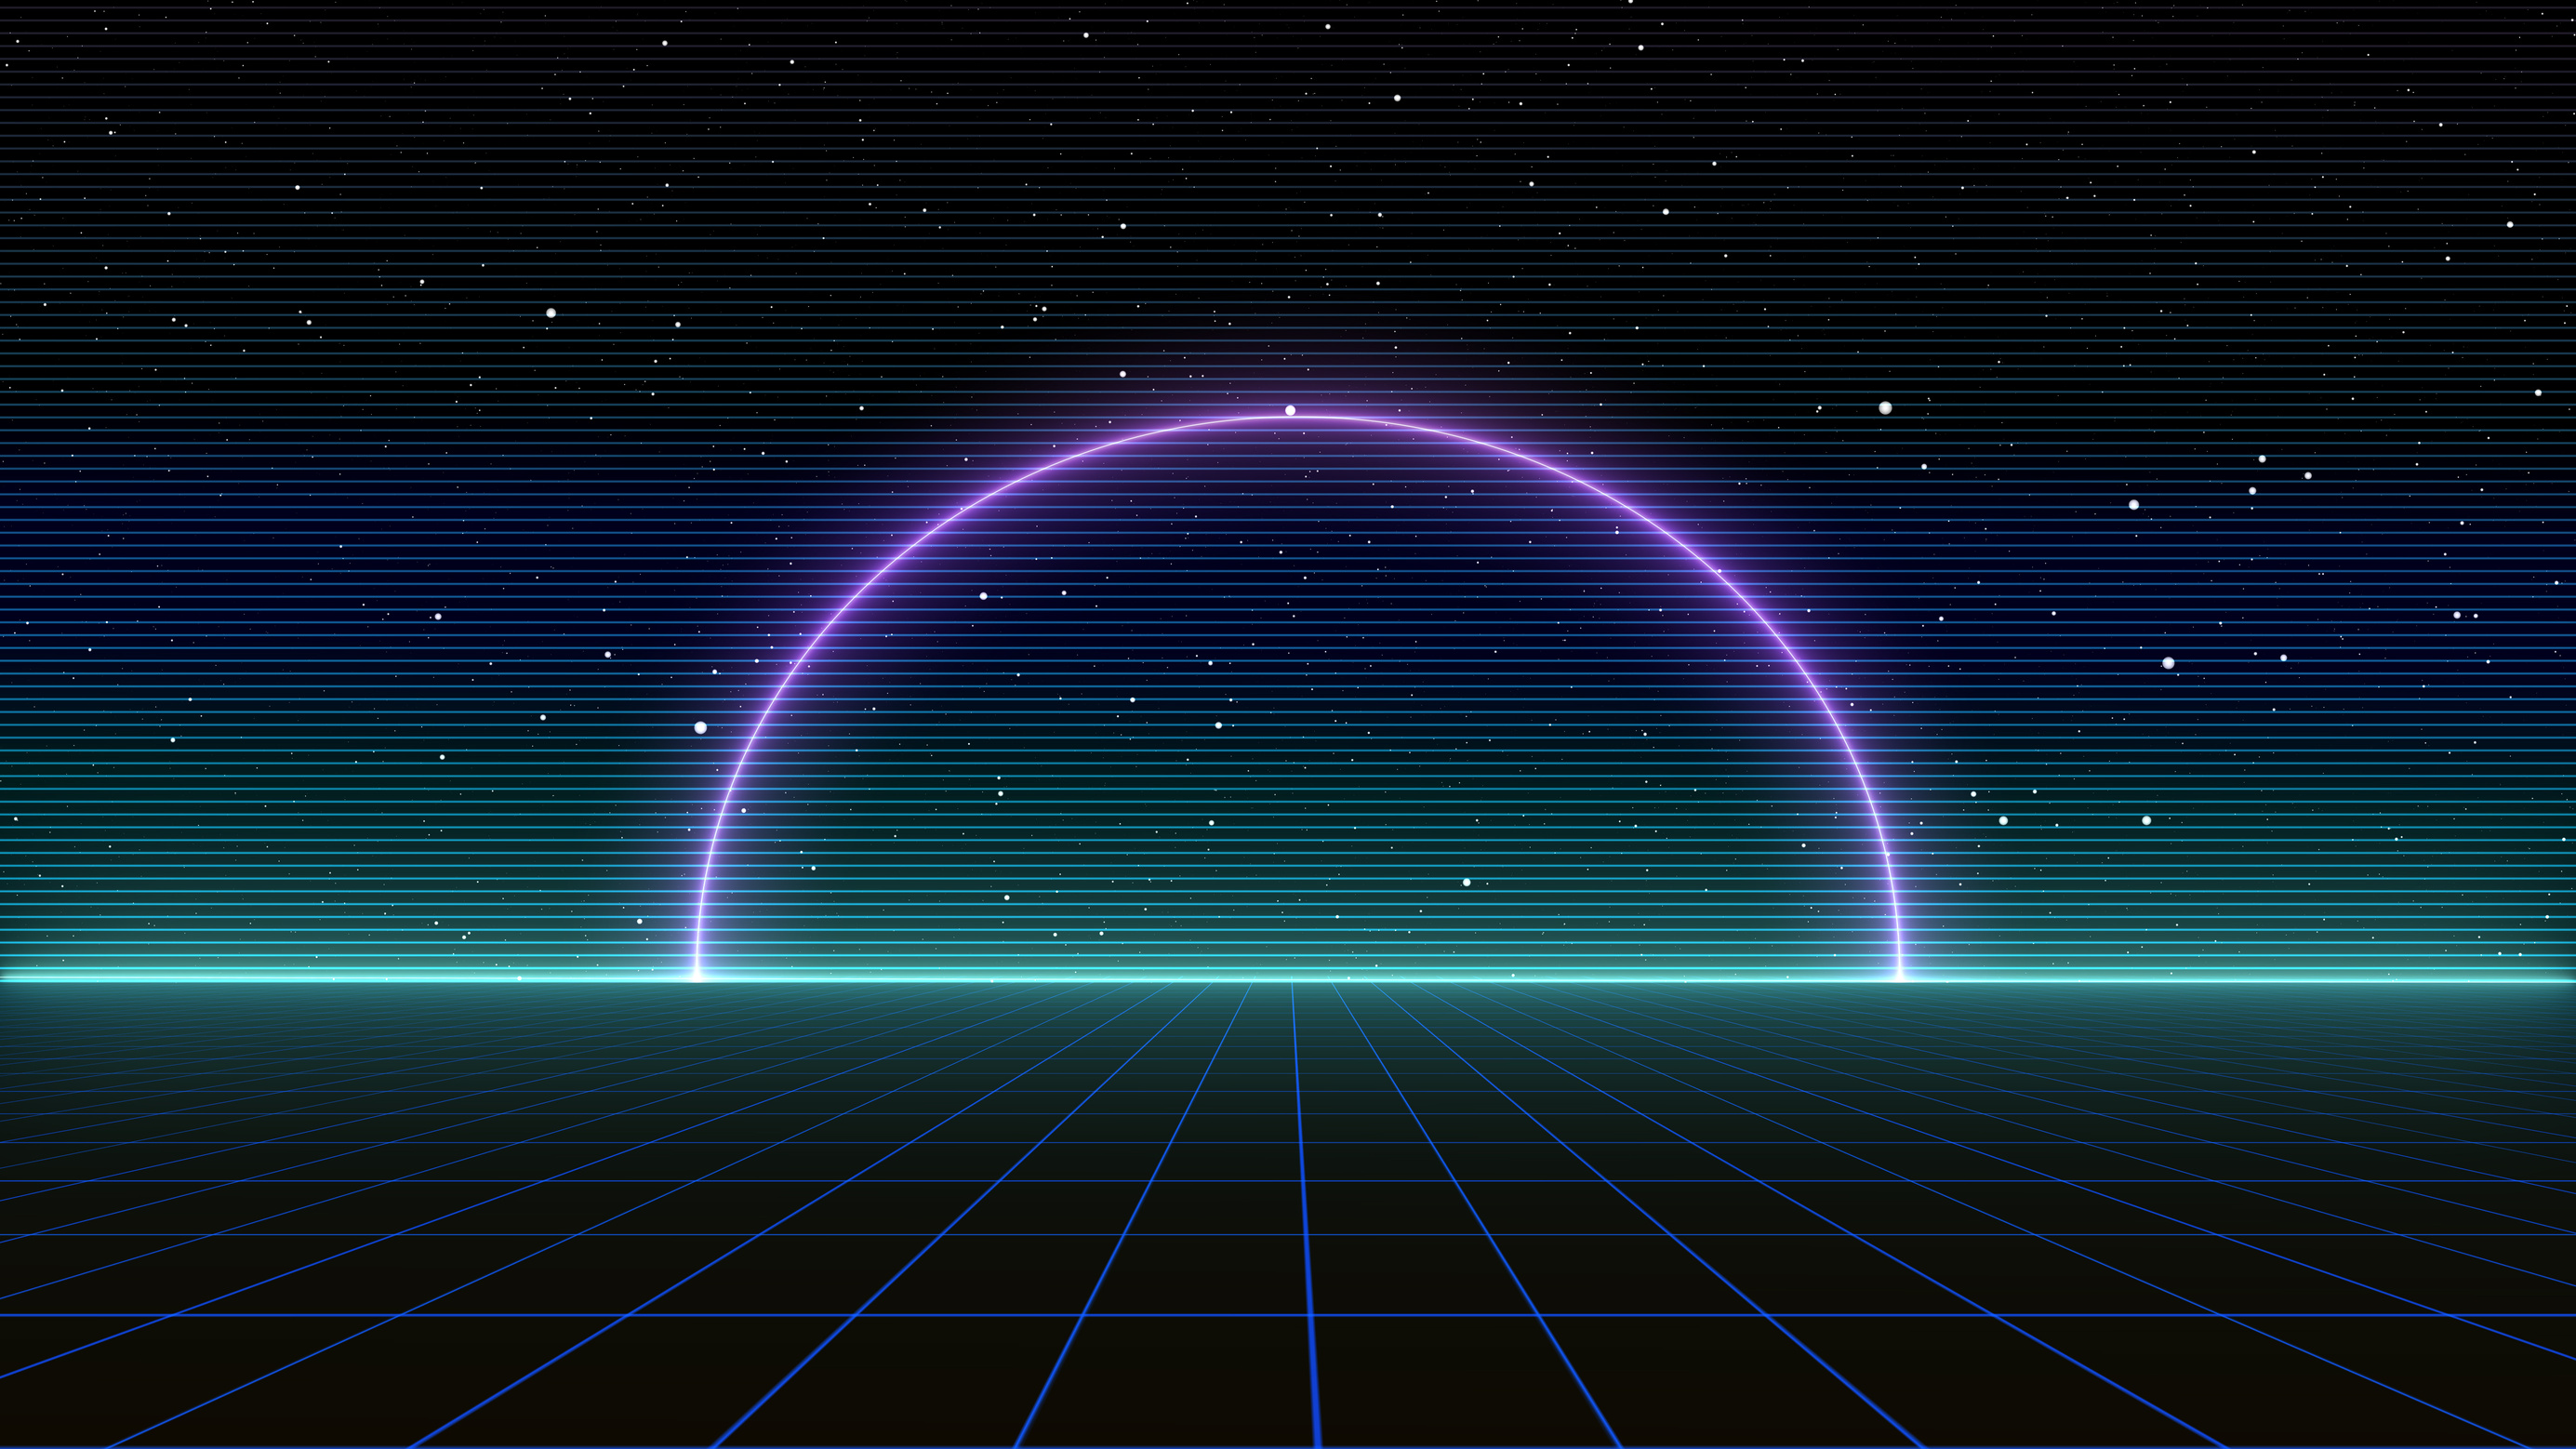 Retro Cyberpunk Style 80S Sci-Fi Background Futuristic with Laser Grid 